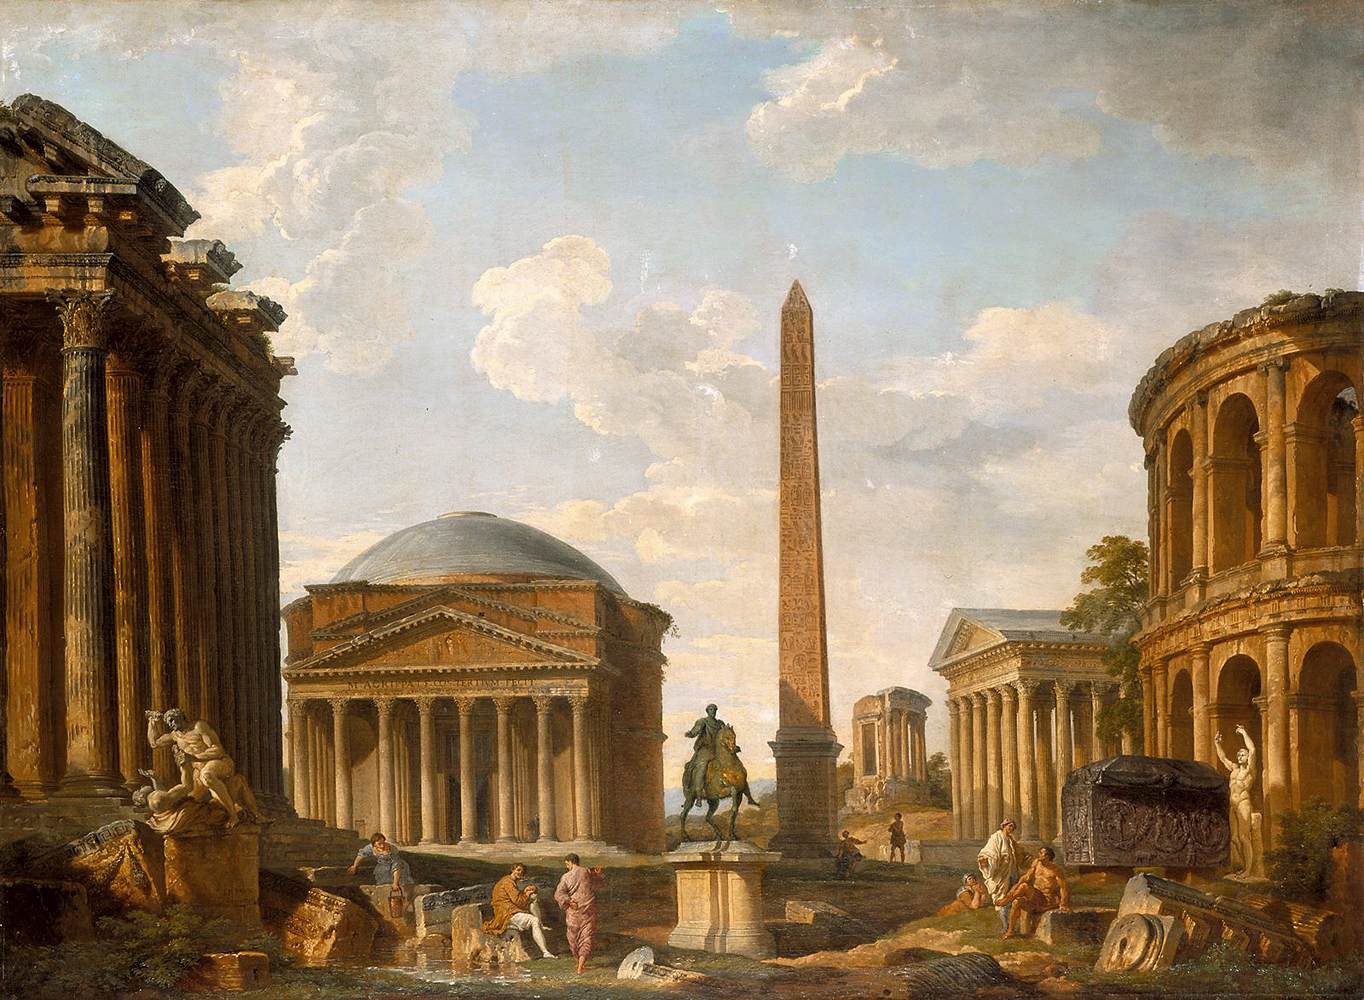 Roman Capricho: Panteon i inne zabytki